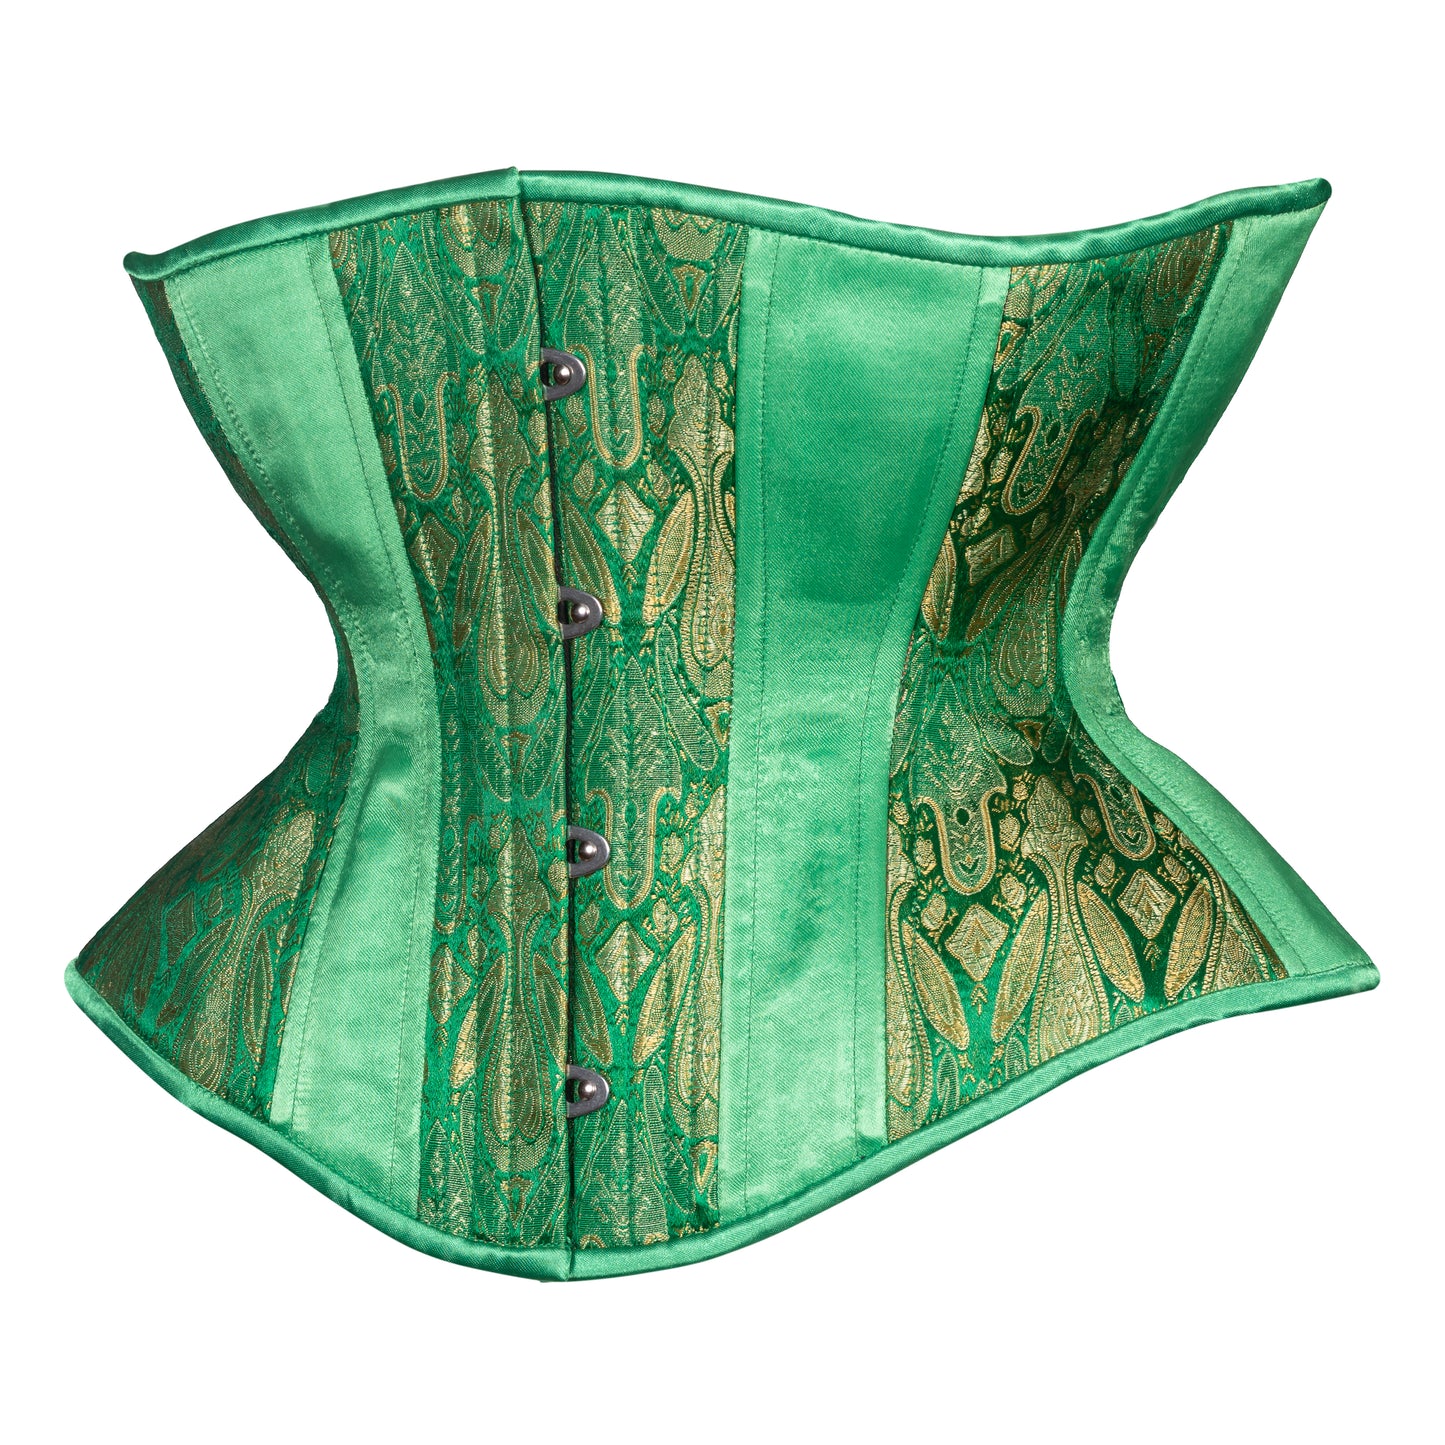 Emerald Corset, Libra Silhouette, Regular